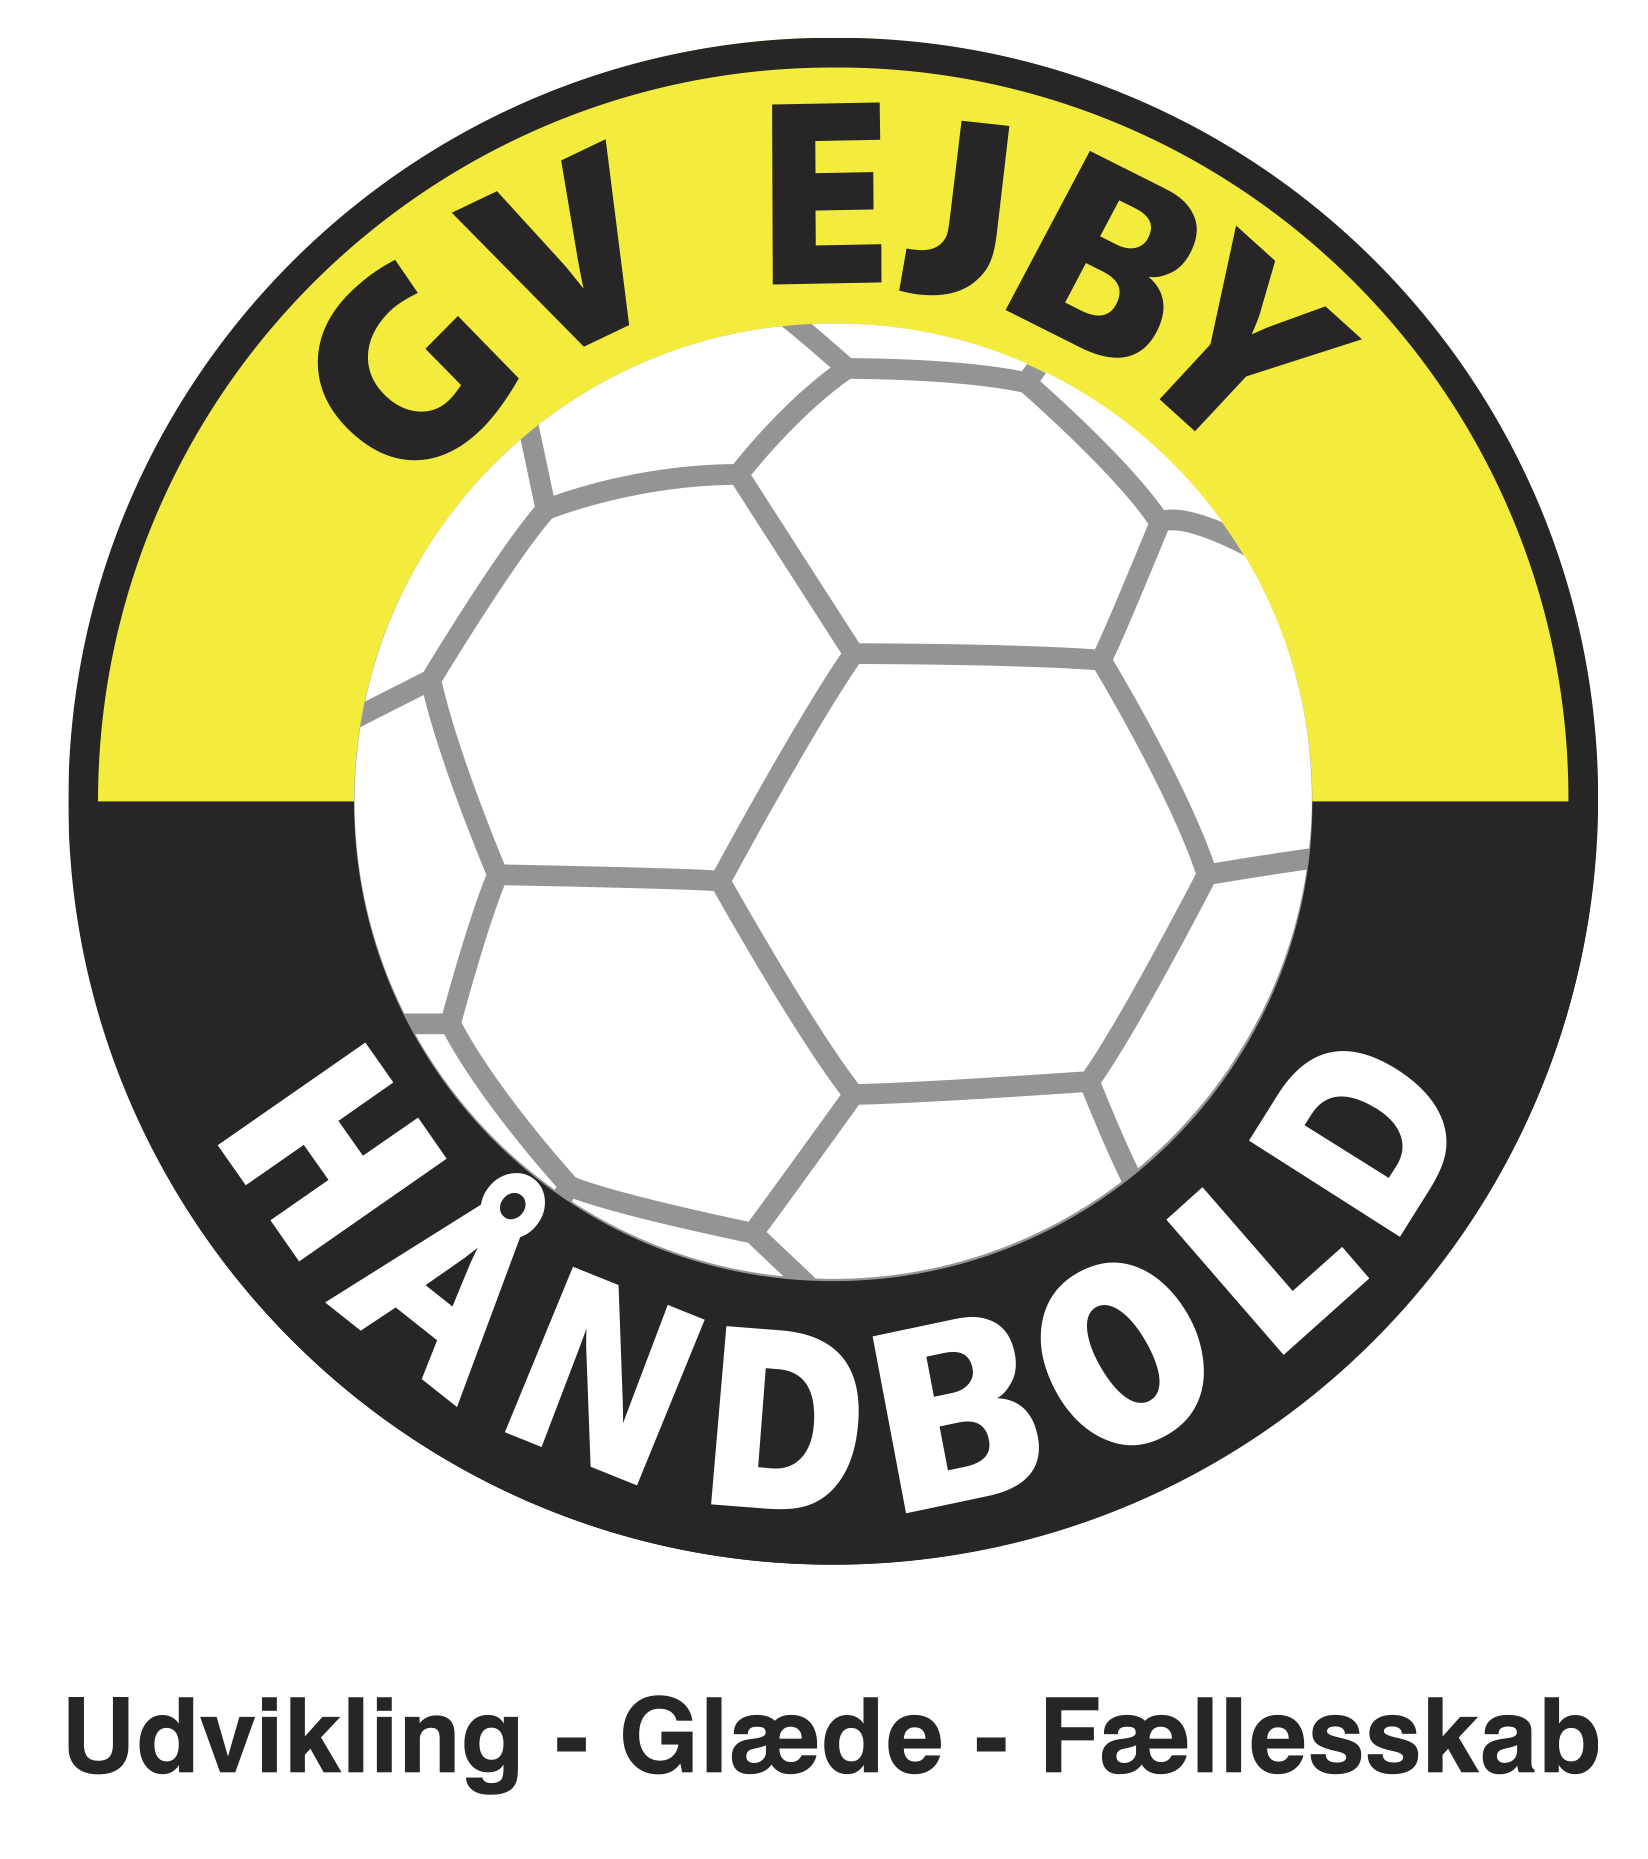 GV Ejby Håndbold